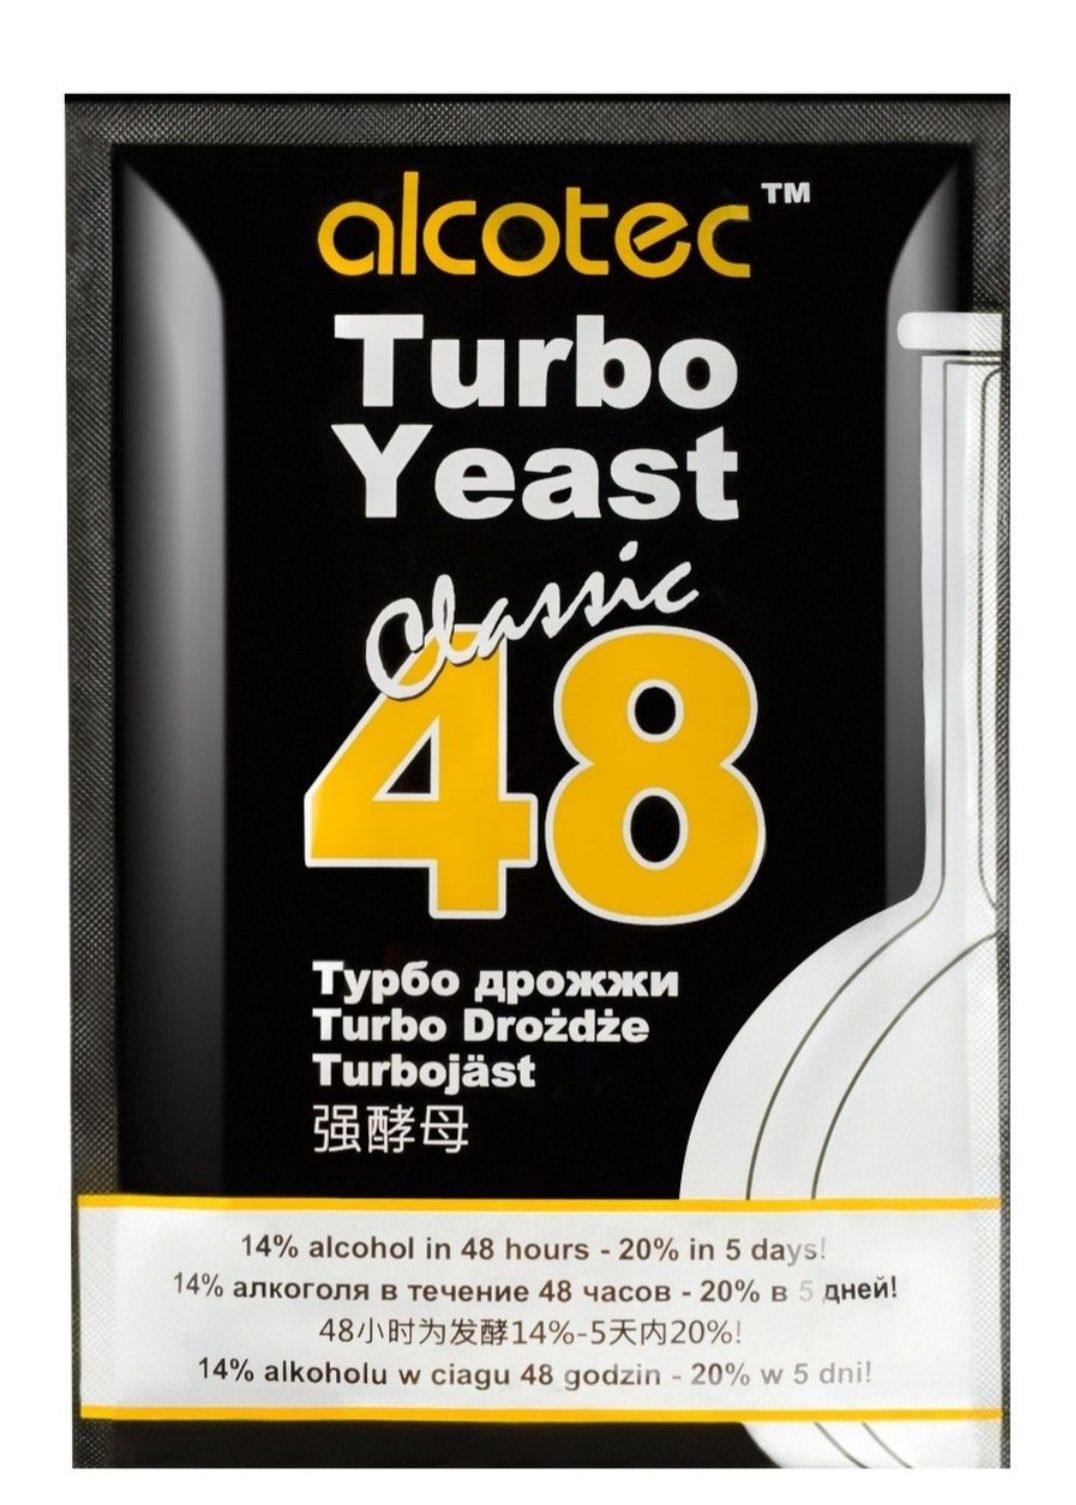 Сухие турбо дрожжи Alcotec Classic 48 Turbo